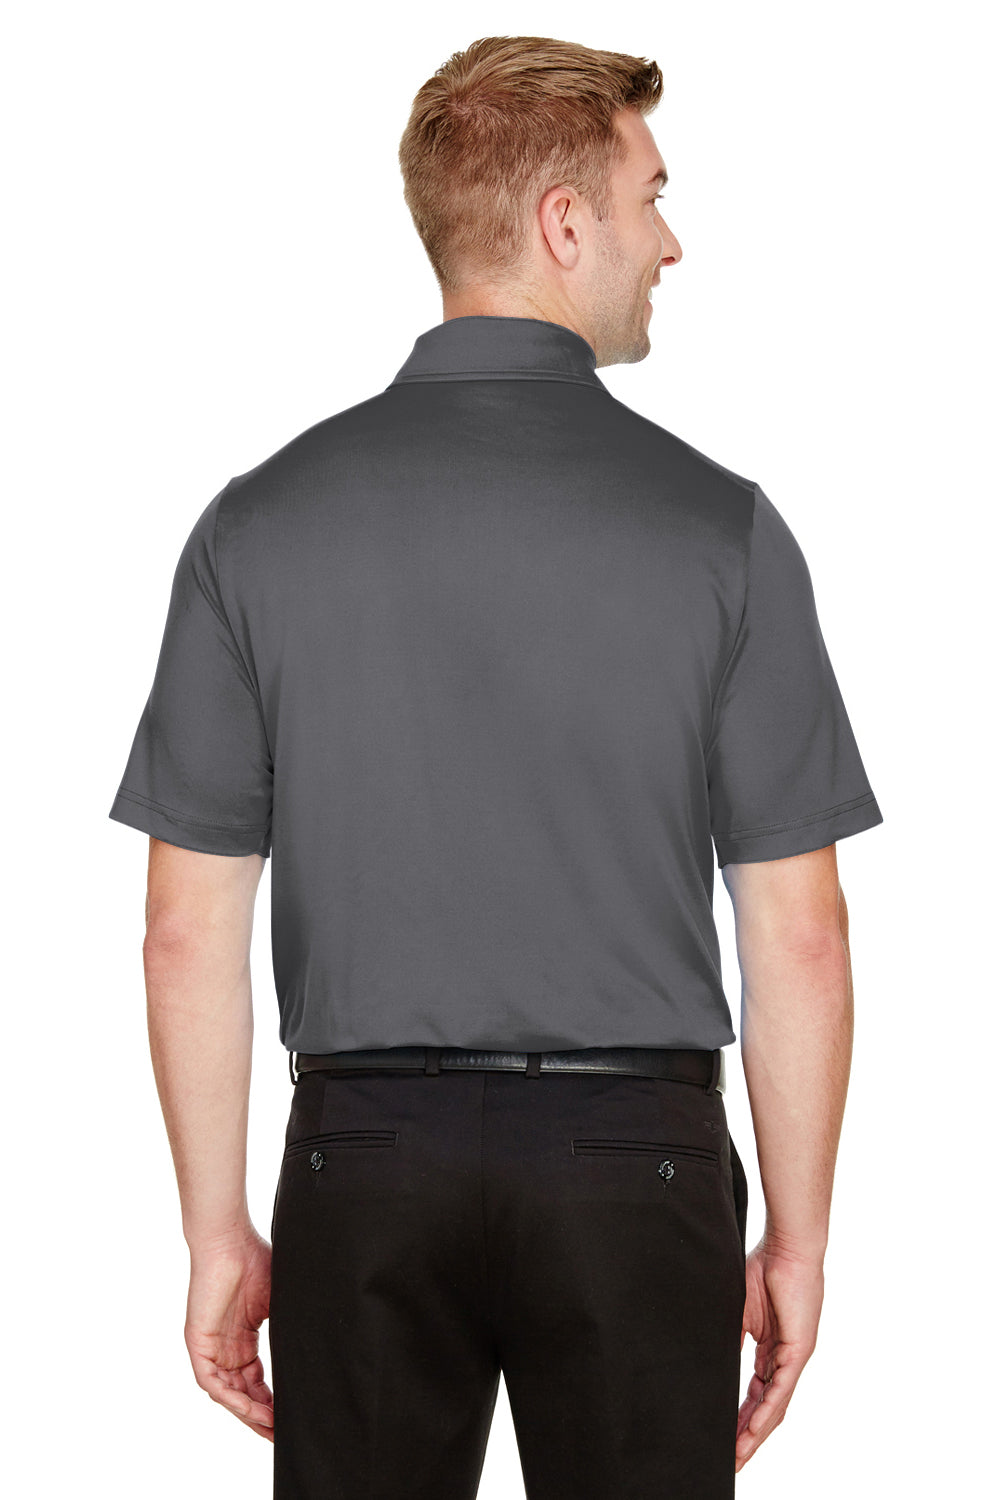 Devon & Jones DG21 Mens CrownLux Range Flex Performance Moisture Wicking Short Sleeve Polo Shirt Graphite Grey Back